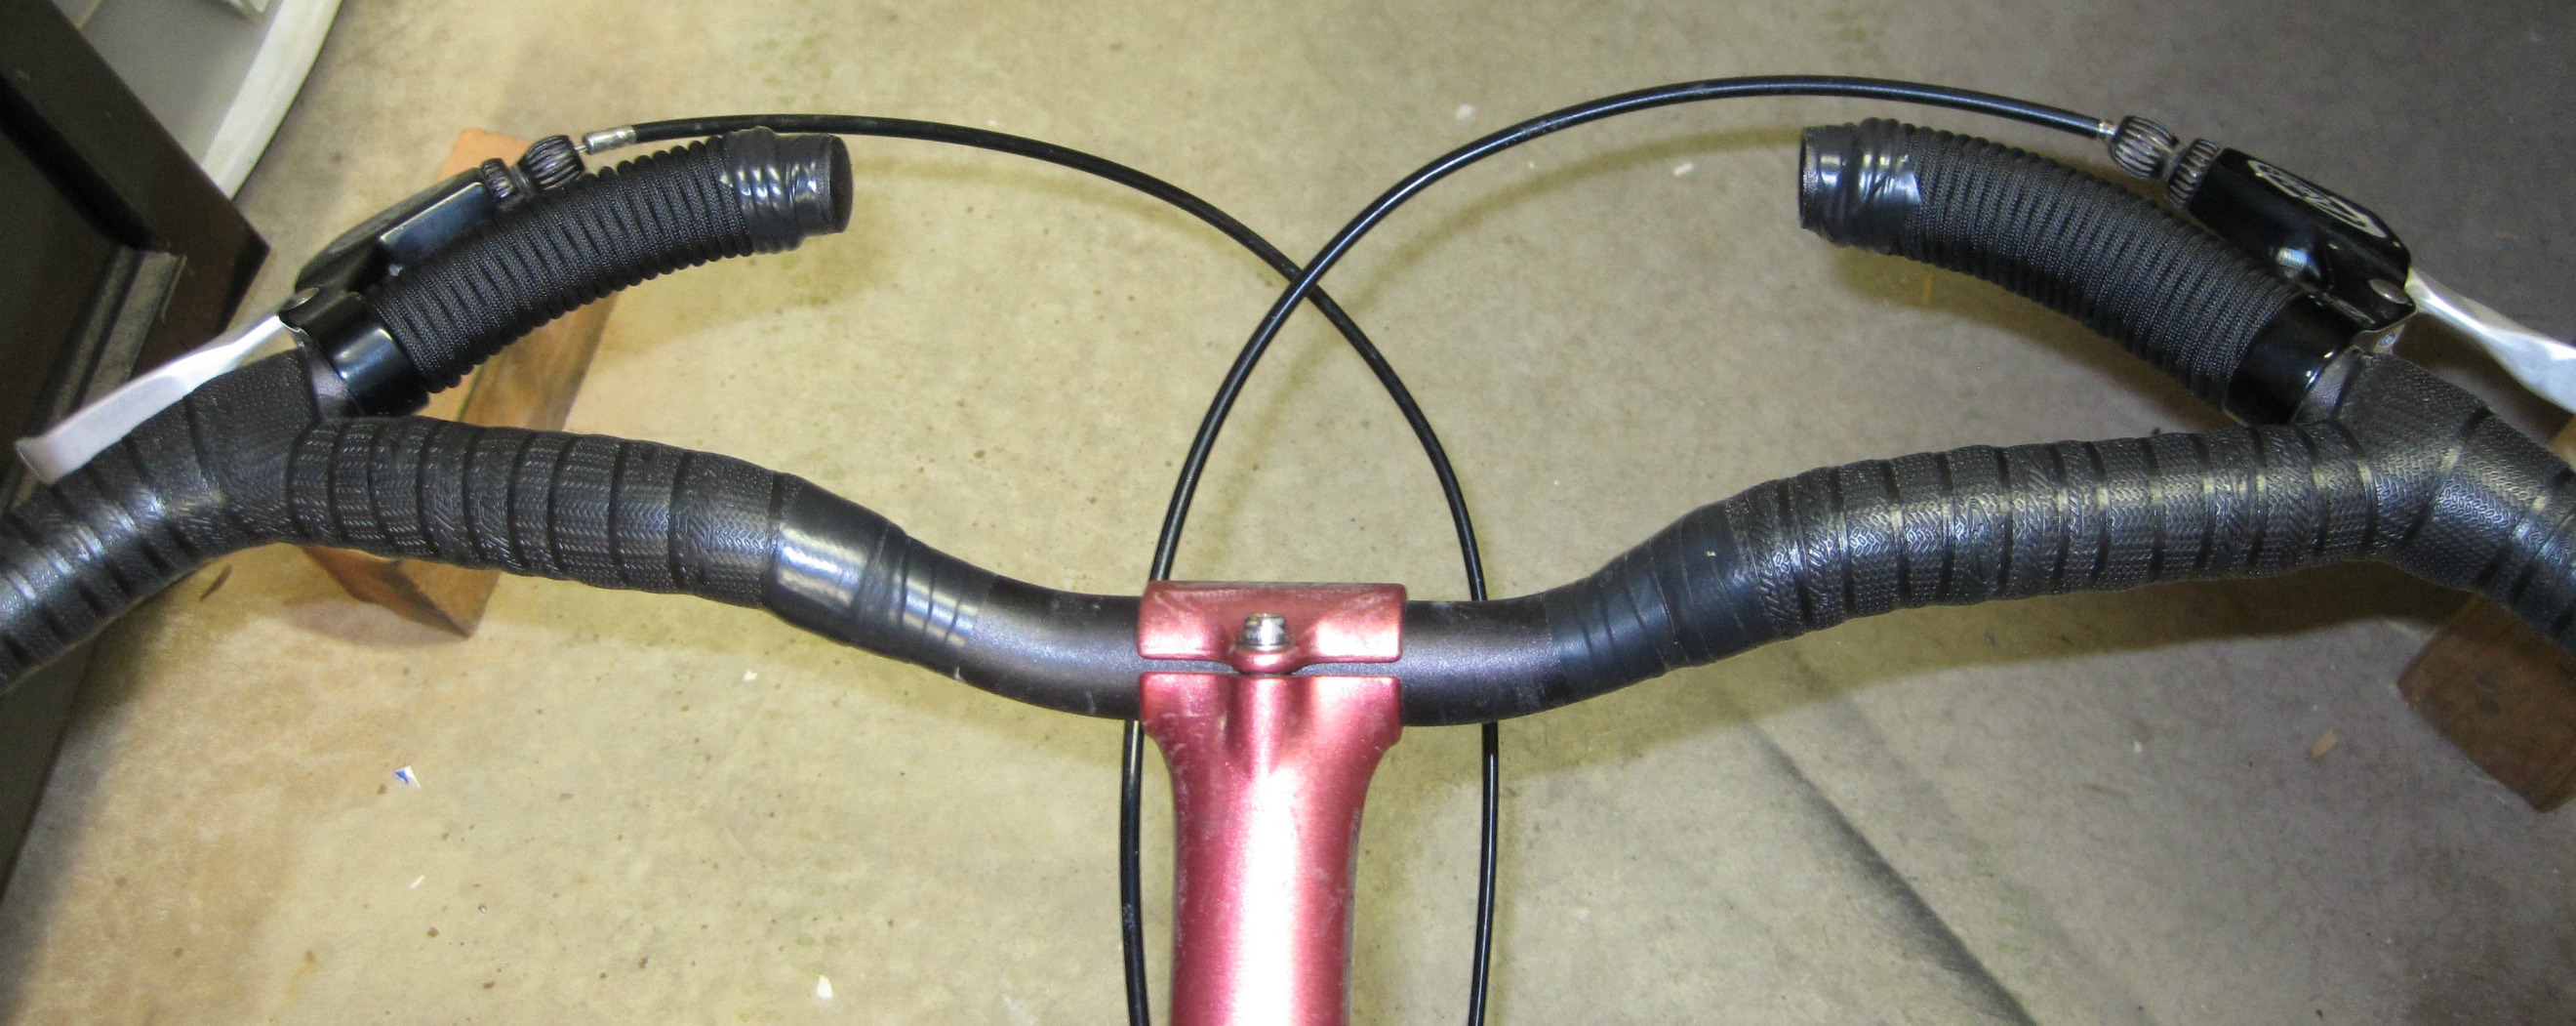 bike handle wraps